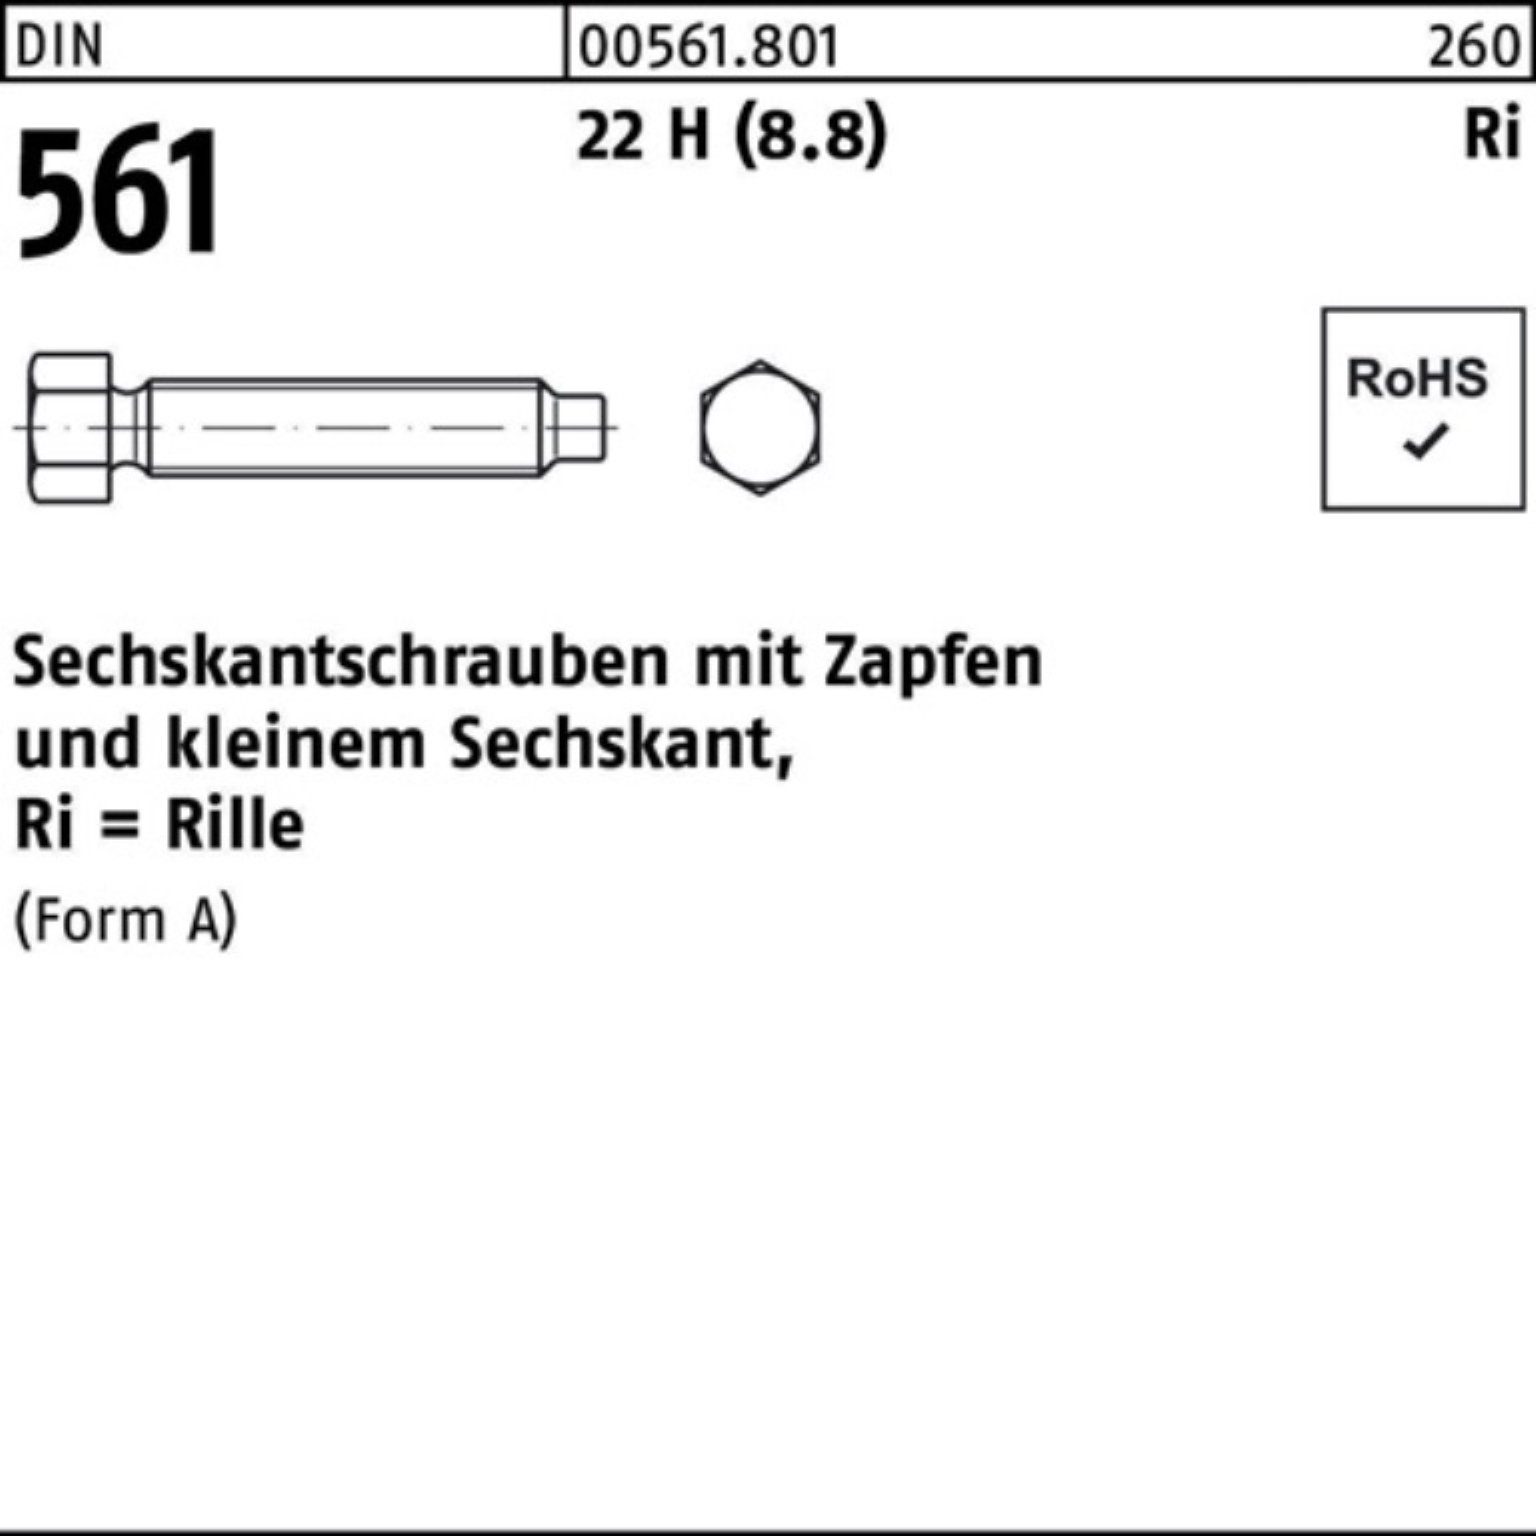 561 DIN H Reyher St 1 AM 100er Sechskantschraube 22 70 30x Pack Sechskantschraube Zapfen (8.8)